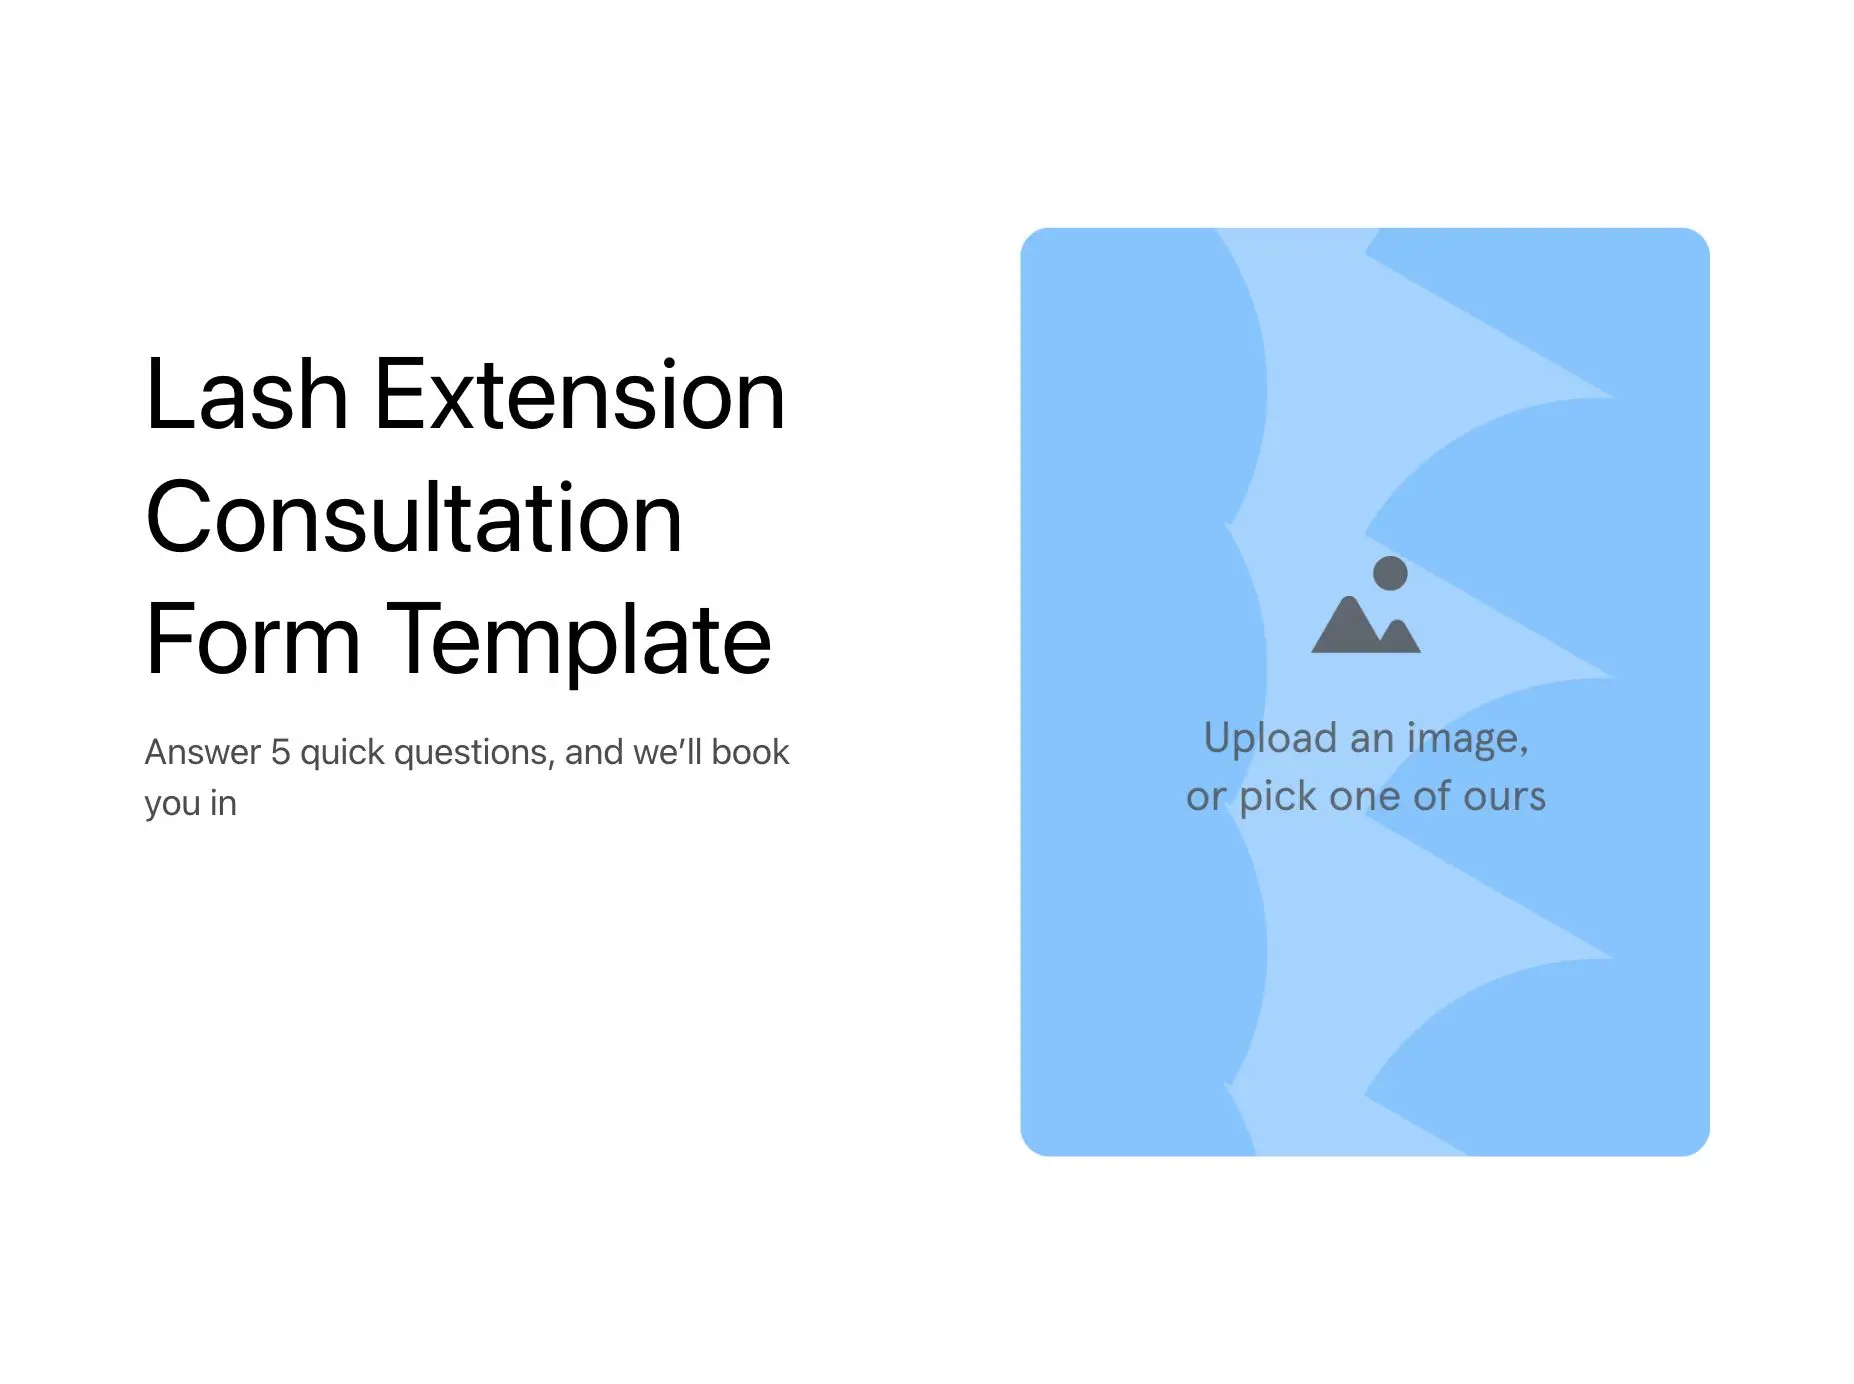 Lash Extension Consultation Form Template Hero